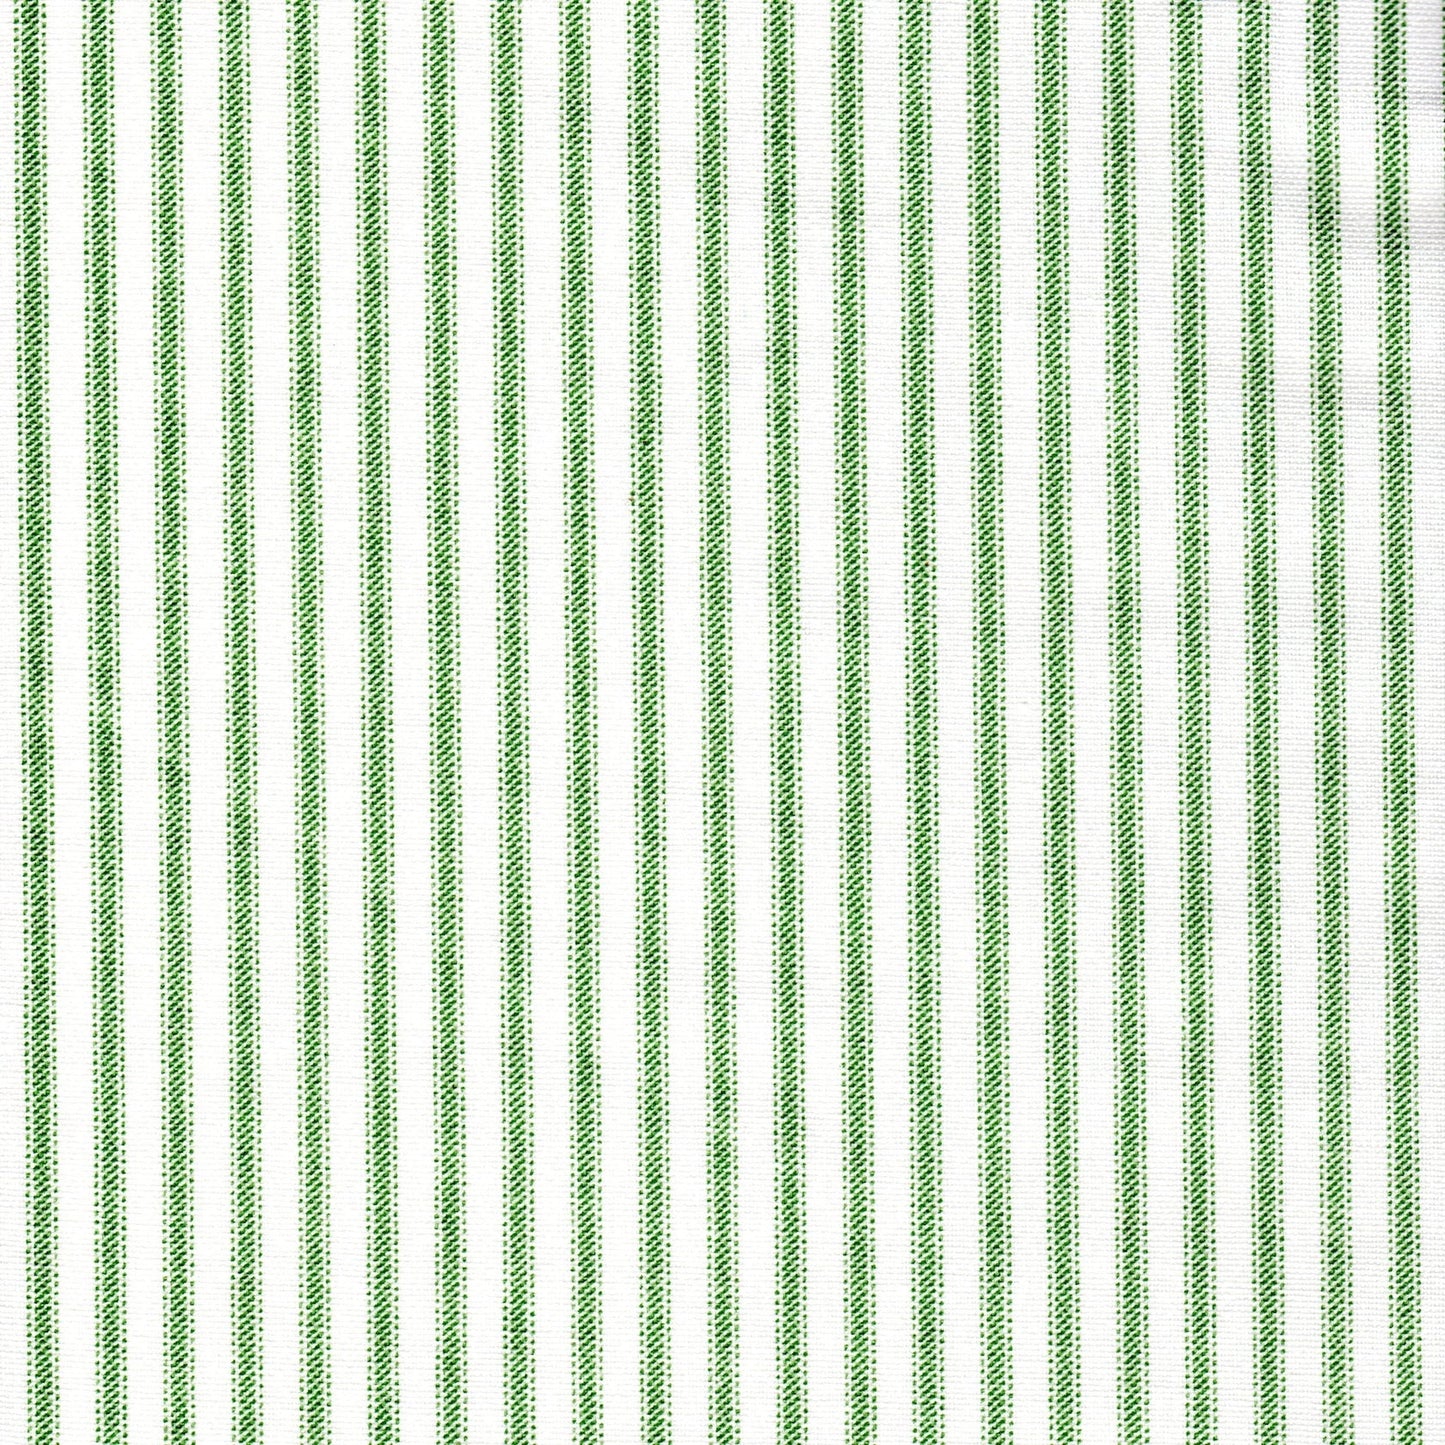 tailored crib skirt in Classic Pine Green Ticking Stripe on White